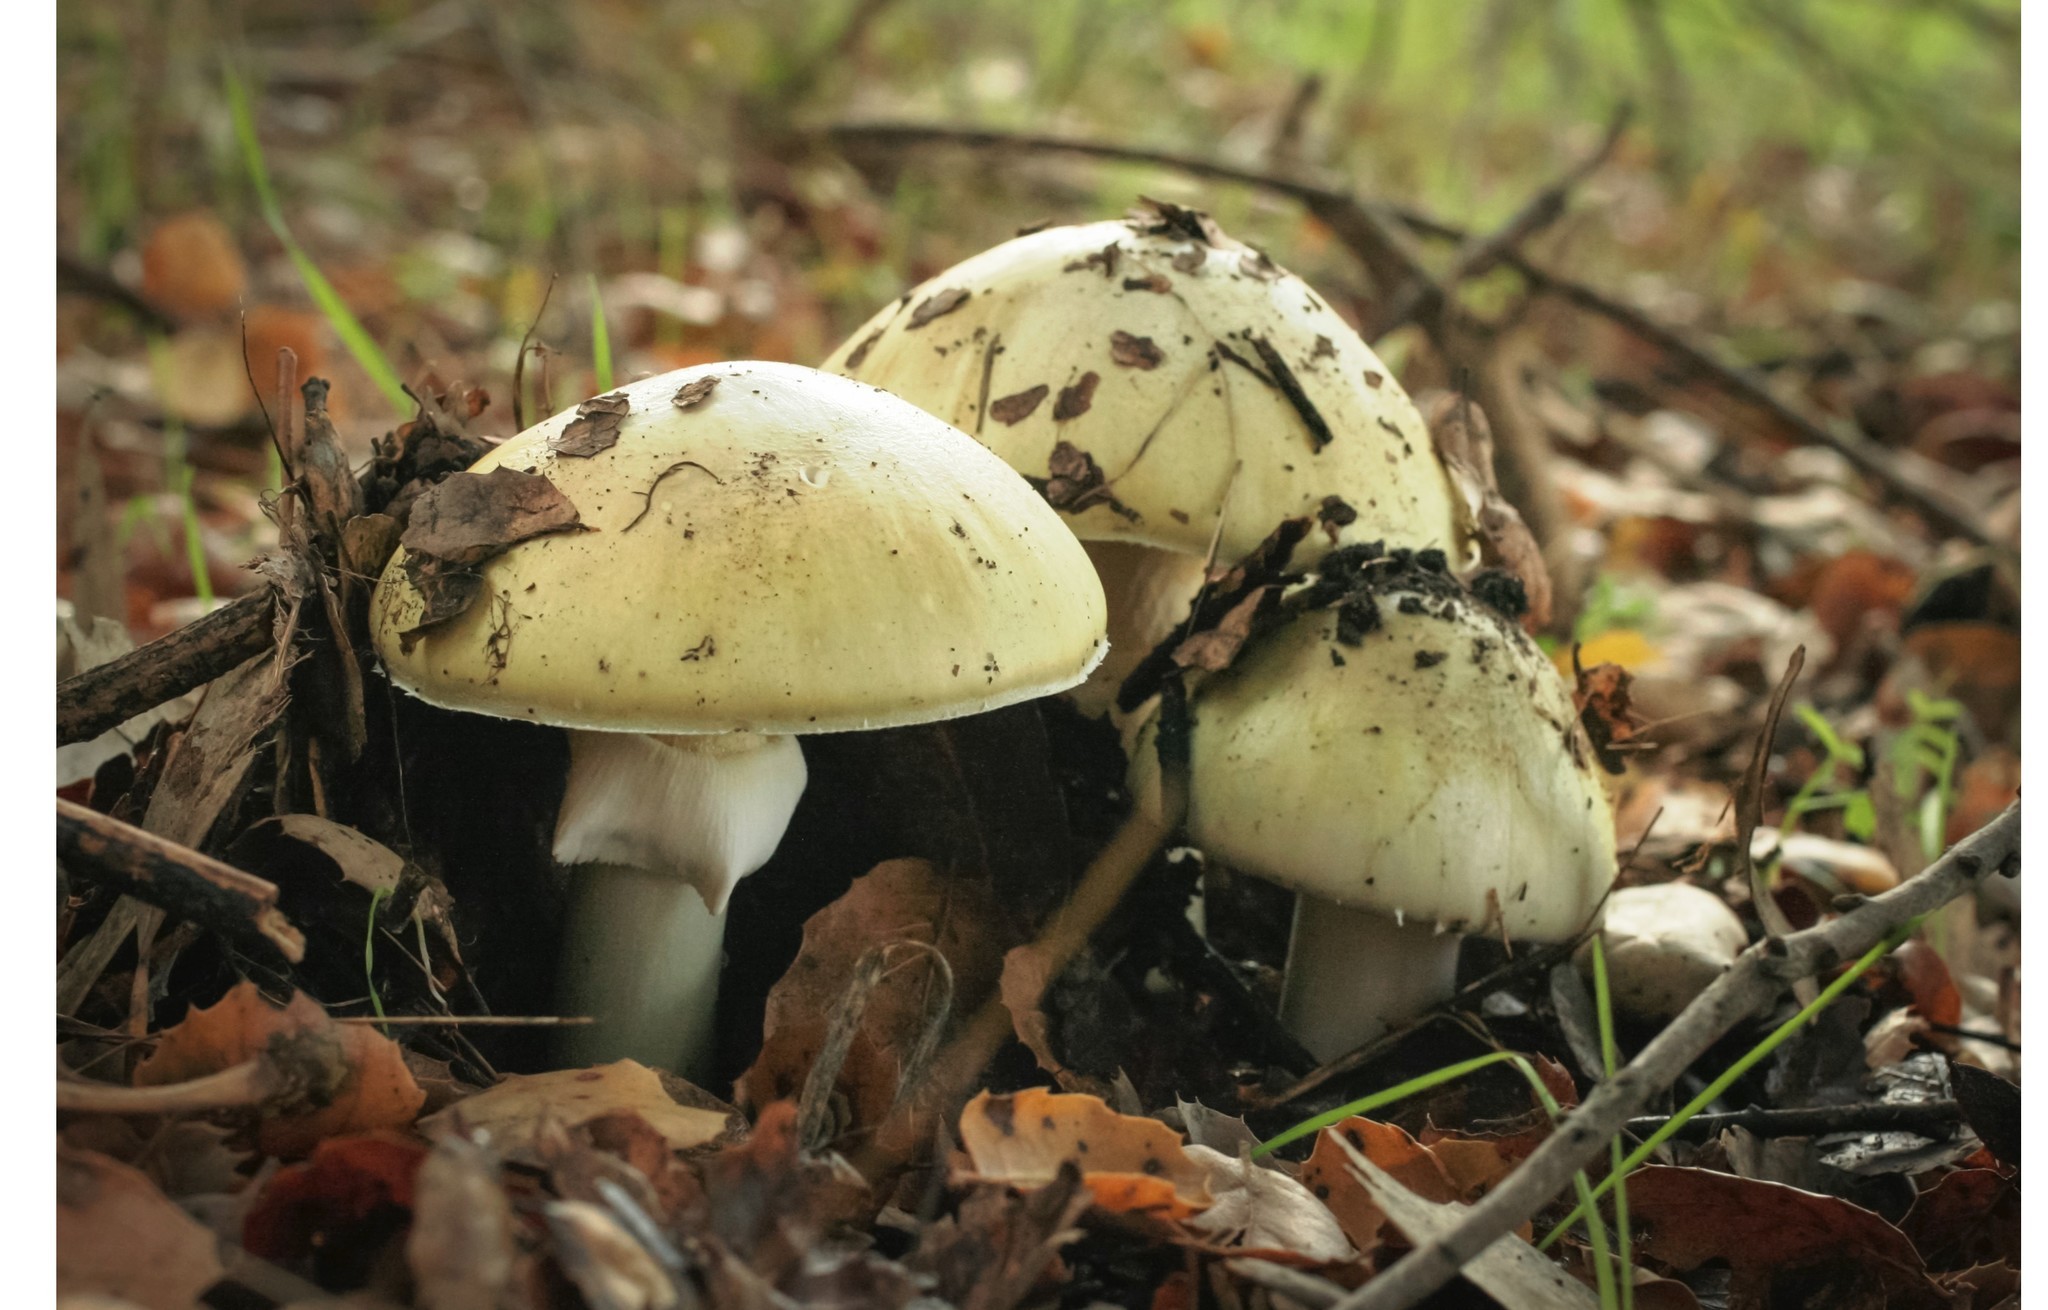 Wild 'death cap' mushrooms poison 14 people in Northern California